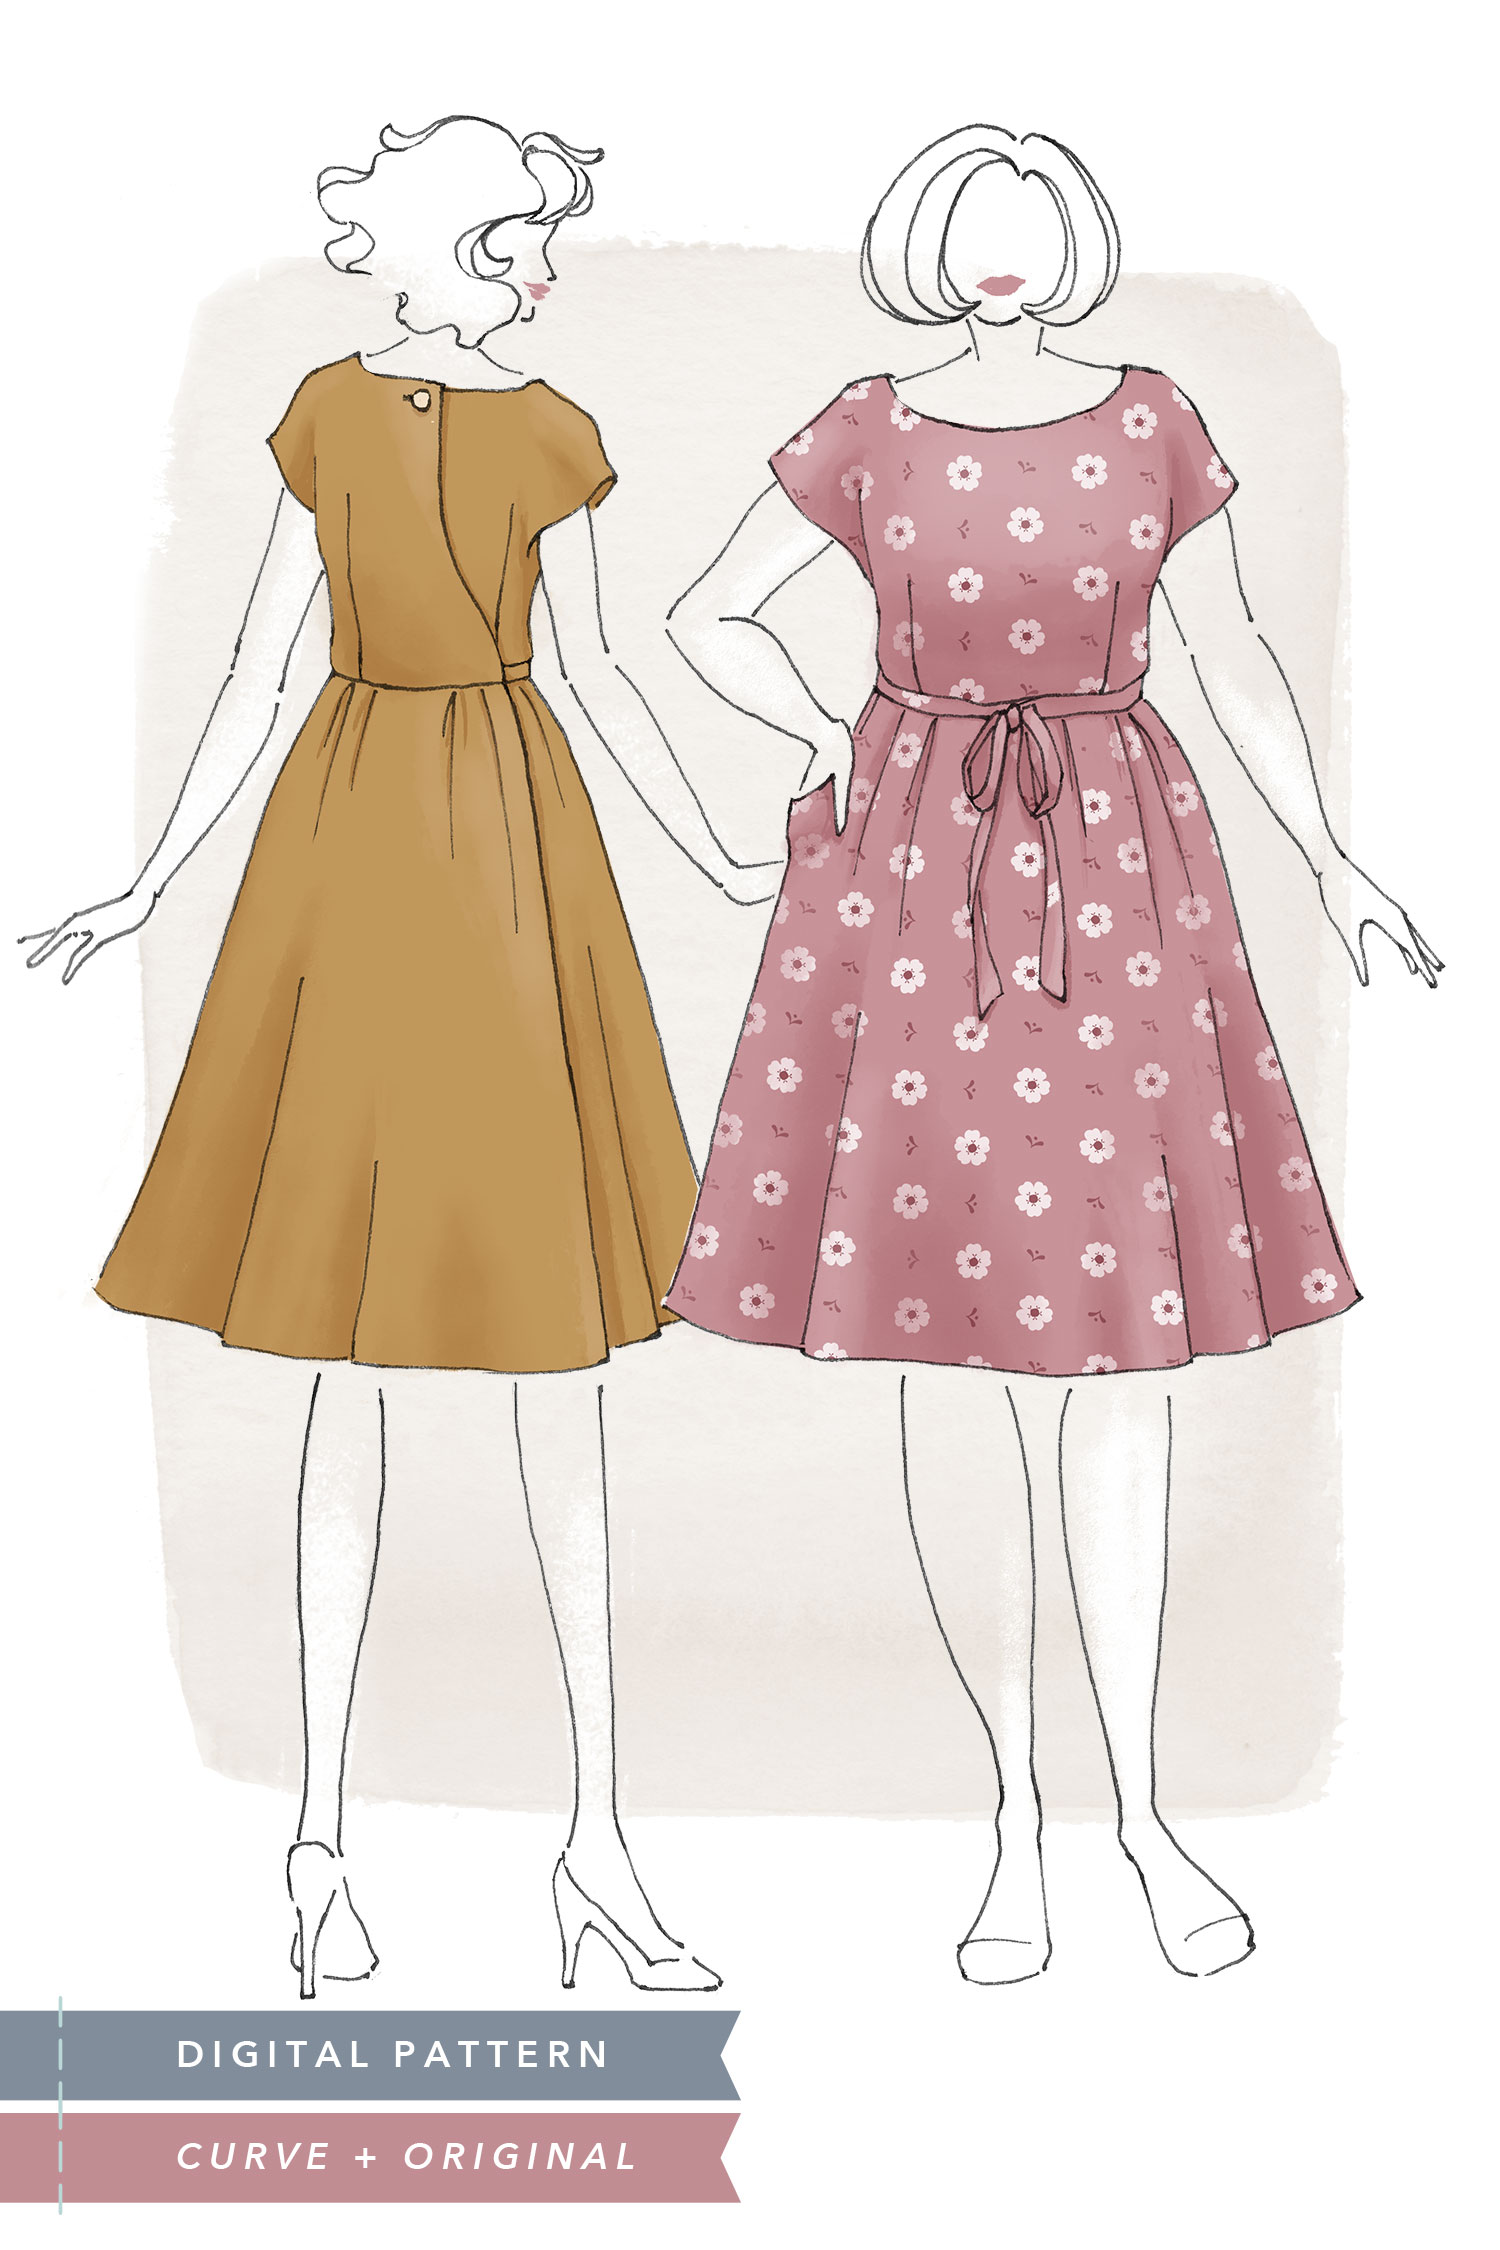 The Raine Dress – Jennifer Lauren Handmade